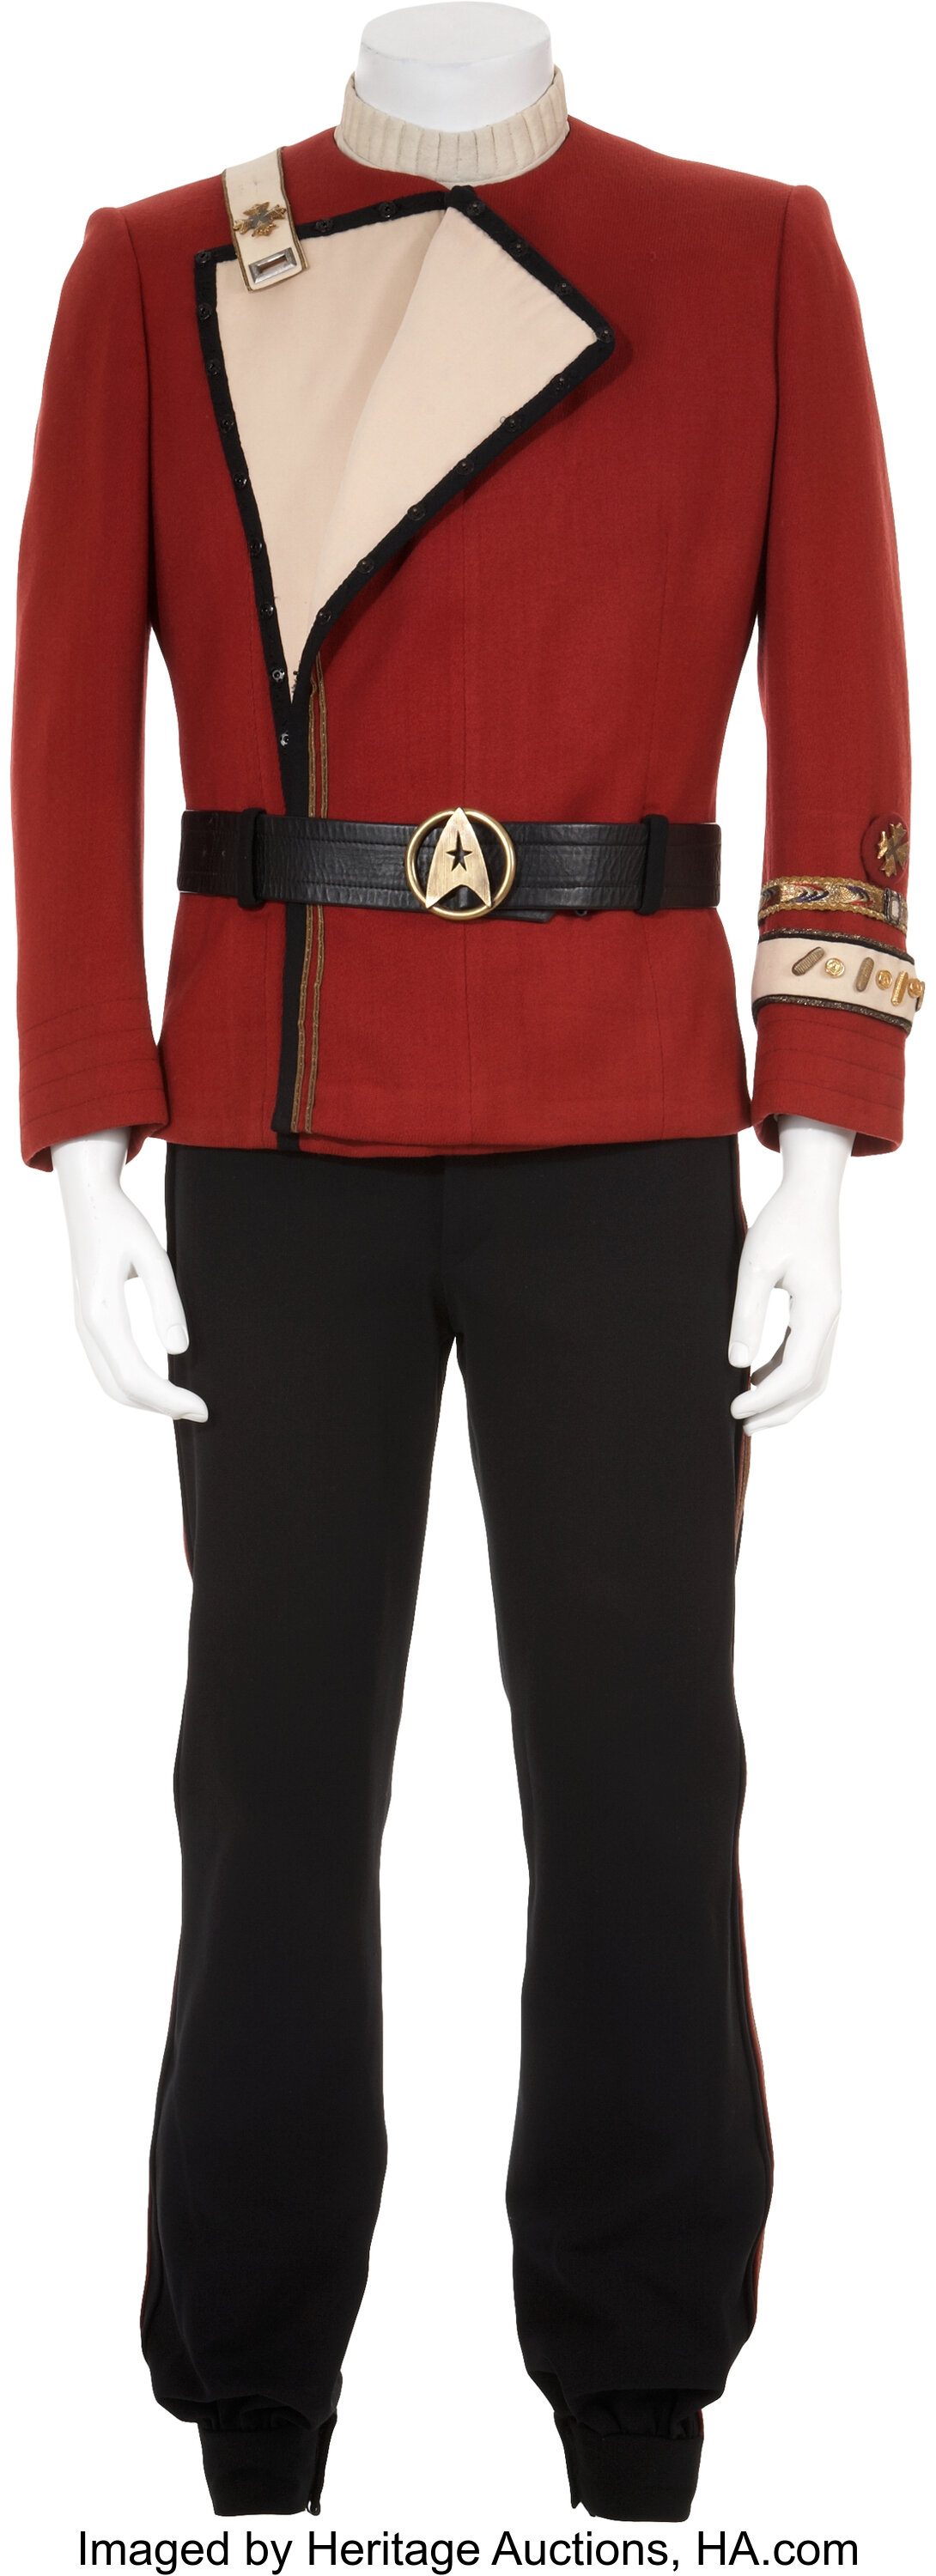 star trek uniforms amazon